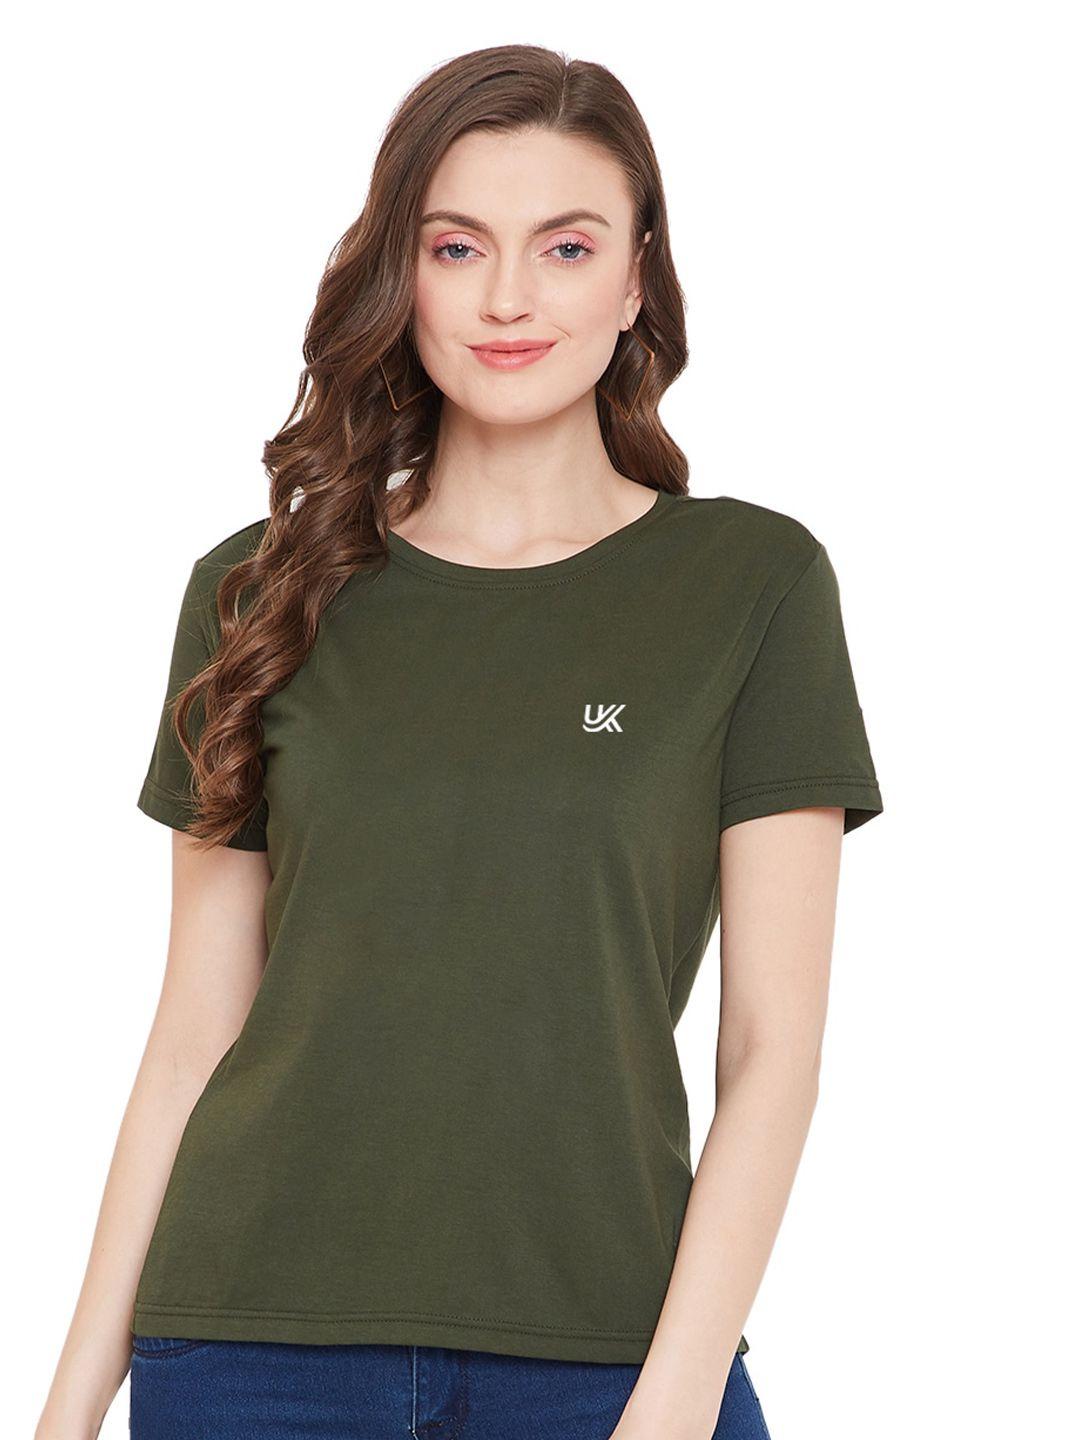 urknit brand logo printed round neck cool max cotton regular t-shirt